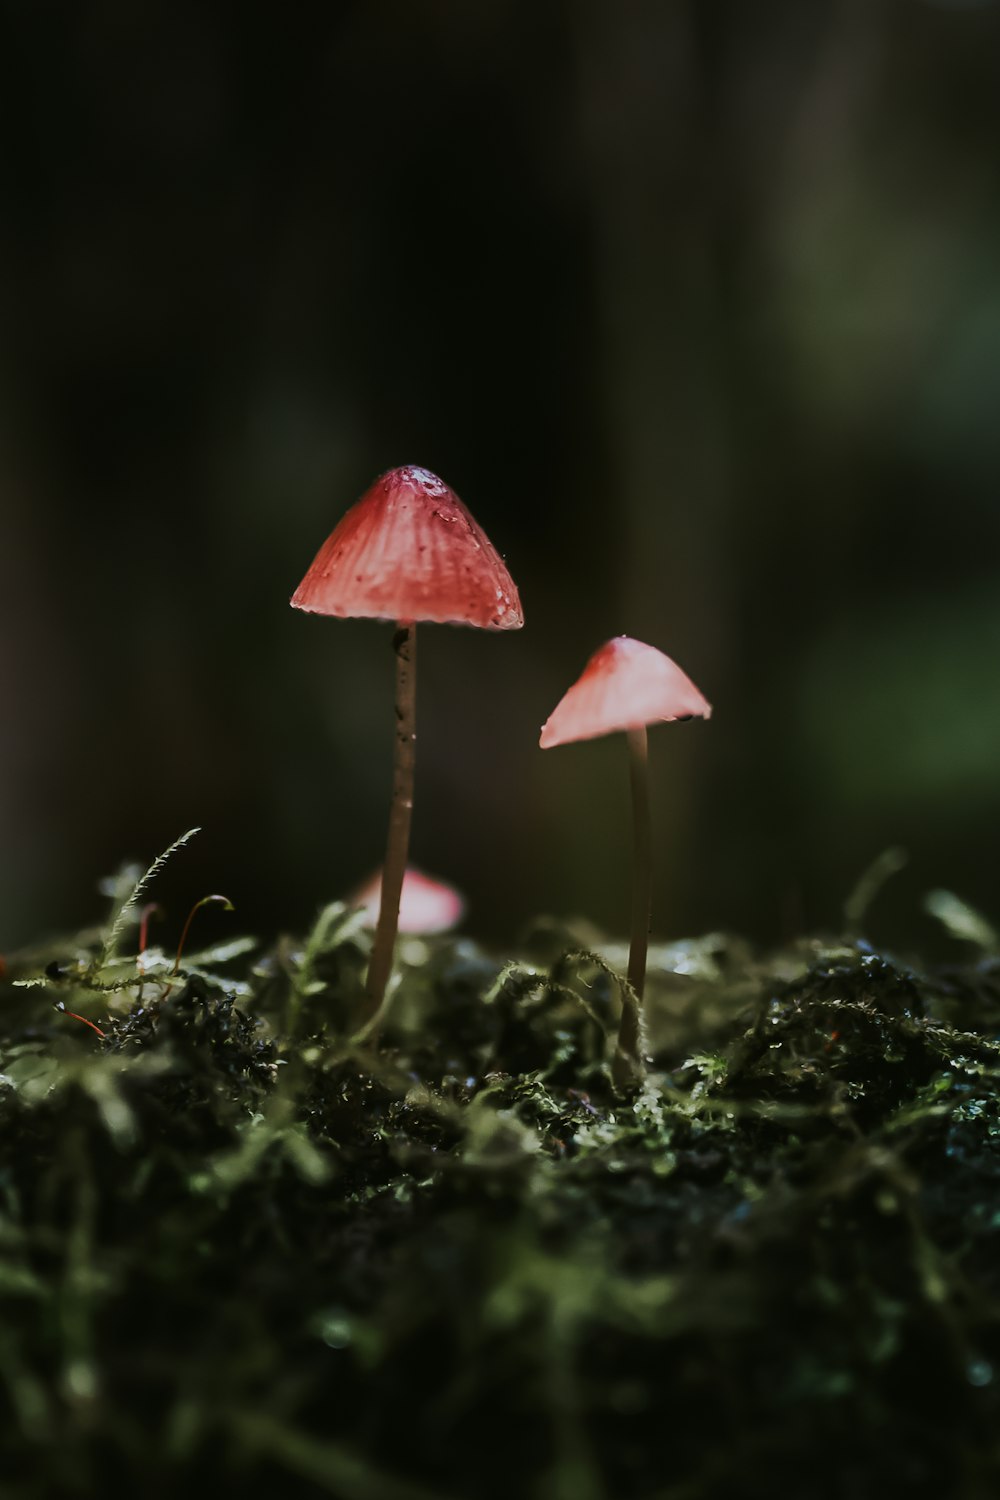 red and white mushroom on ground